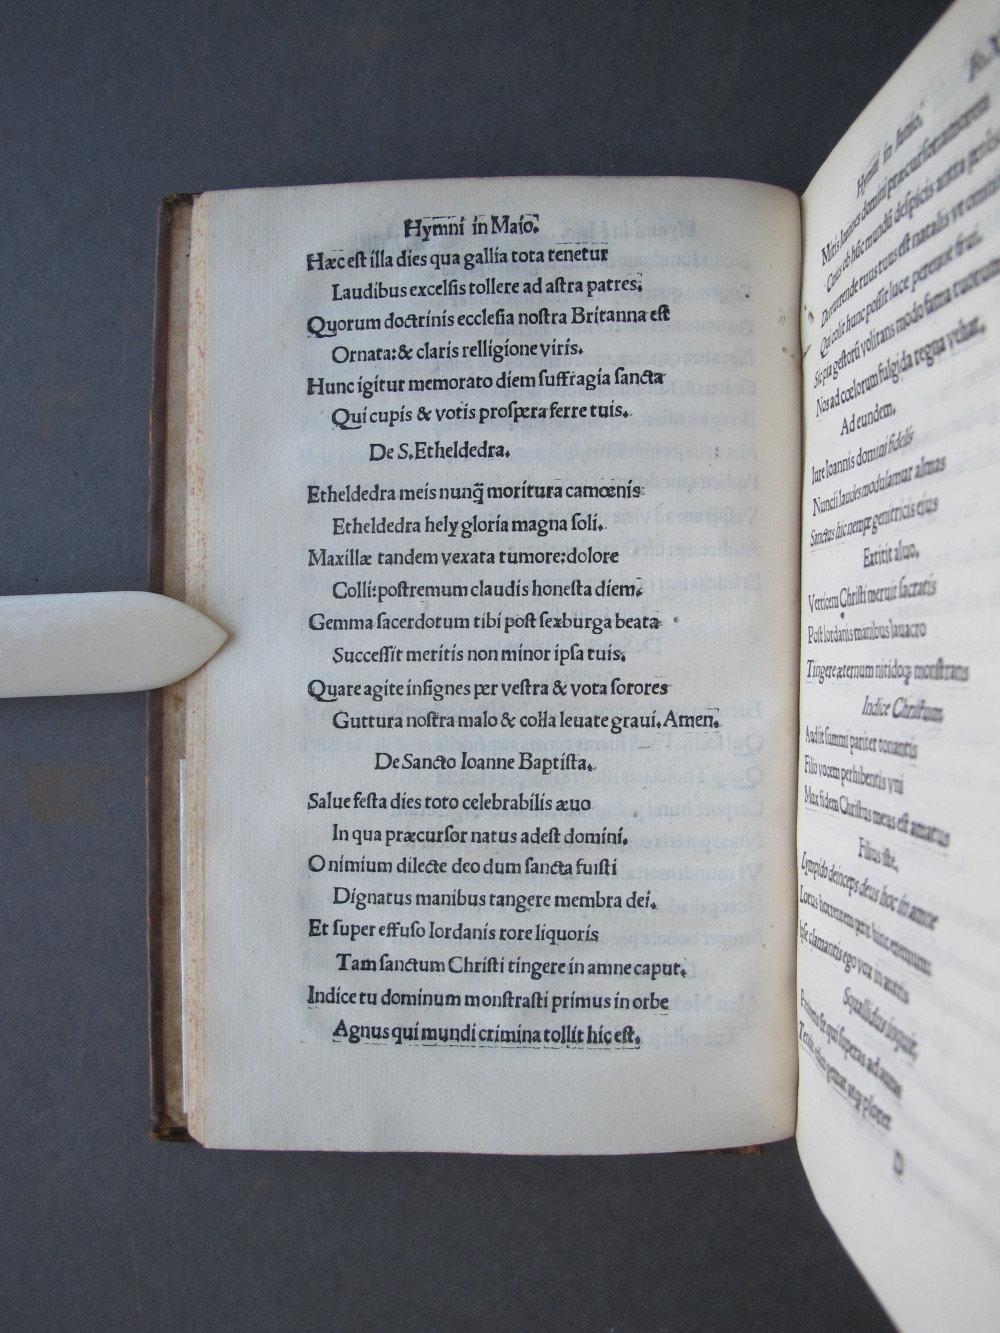 Folio 24 verso